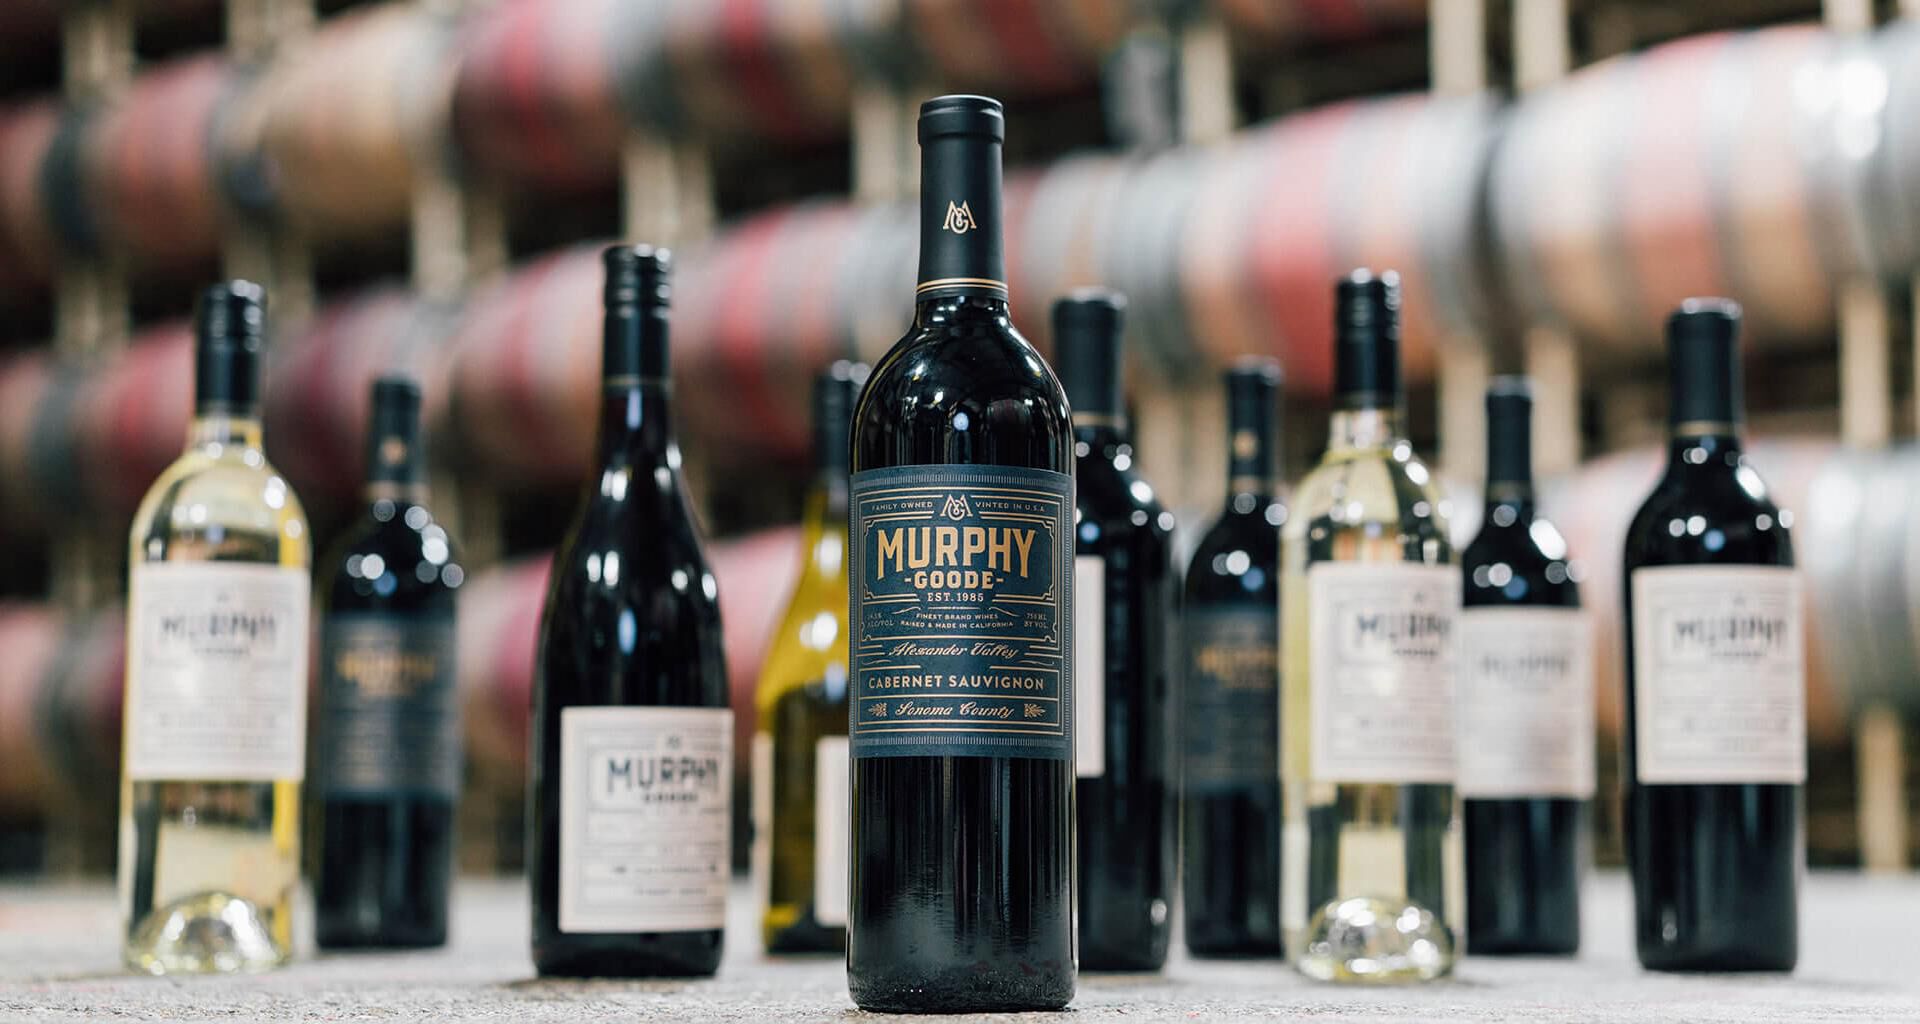 Murphy Goode wine bottle